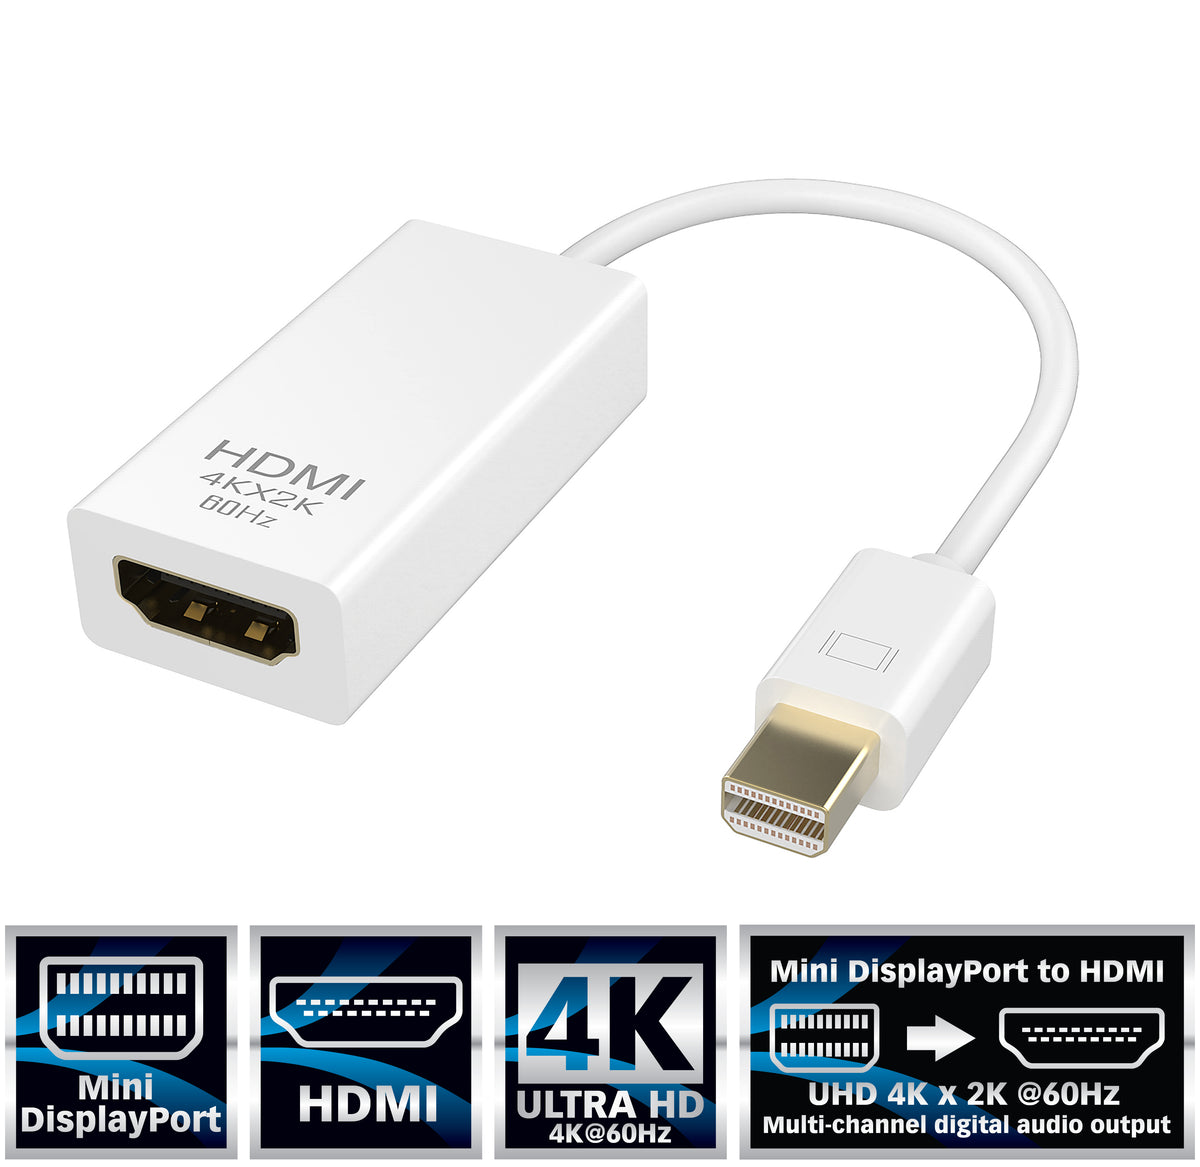 4K@60HZ Mini DisplayPort (Thunderbolt 2) to HDMI Adapter Gold Plated